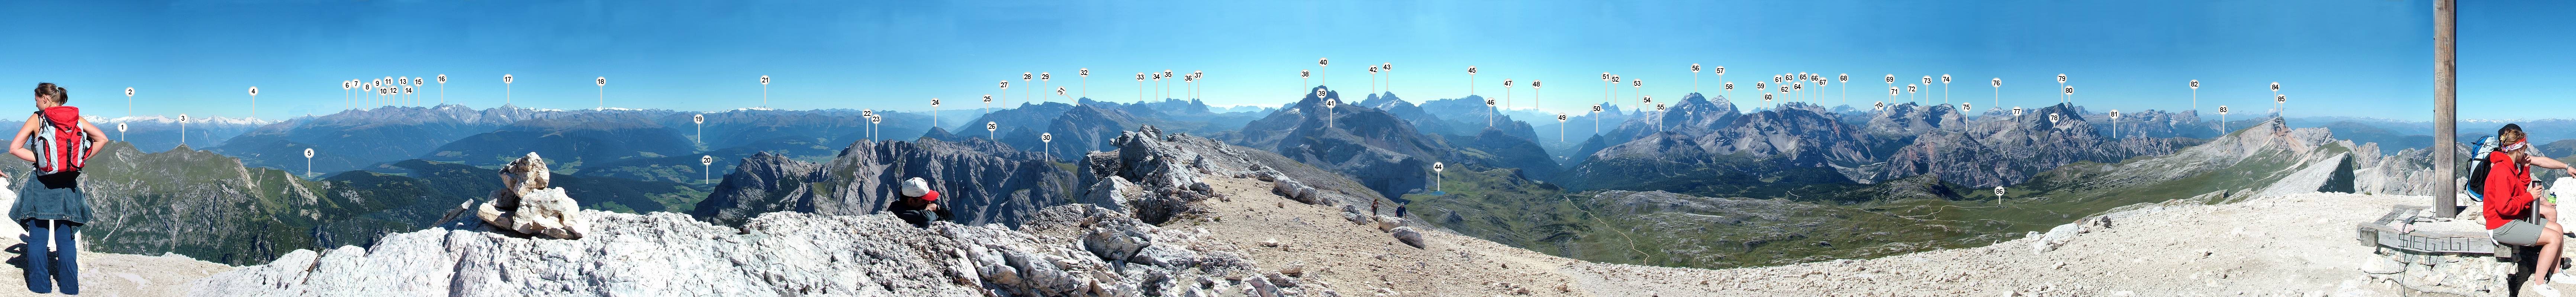 Das Gipfel-Panorama-Bild. Die Fernsicht ist sehr gut. Folgendes ist rund um den Seekofel zu sehen: (1) Maurerkopf [Monte Muro, 2567m], (2) Mesule [Cima Mesule, 2994m], (3) Rochalpenkopf [Col Alc, 2542m], (4) Grosser Löffler [Monte Lavello, 3376m], (5) Bruneck [Brunico], (6) Kleine Windschar [Piccola Cima del Vento, 2981m], (7) Grosse Windschar [Grande Cima del Vento, 3041m], (8) Grübscharte [Forc. della Fossa, 2802m], (9) Kleiner Rauchkofel [Piccola Cima Fumo, 3006m], (10) Grosser Rauchkofel [Grande Cima Fumo, 3043m], (11) Großer Fensterlekofel [Grande Cima Finestra, 3171m],  (12) Kleiner Fensterlekofel [Piccola Cima Finestra, 3140m], (13) Wasserkopf [3135m], (14) Morgenkofel [3073m], (15) Schwarze Wand [Croda Nera, 3105m], (16) Schneebiger Nock [Monte Neveso, 3358m], (17) Hochgall [Collalto, 3436m], (18) Grossvenediger [3666m], (19) Gsieser Tal [Val Casies], (20) Pustertal [Val di Pusteria], (21) Grossglockner [3798m], (22) Gametzalpenkopf [2594m], (23) Gamsscharte [Sella dei Camosci, 2513m], (24) Daumkofel [2259m], (25) Sarlkofel [M. Serla, 2378m], (26) Schwalbenkofel [M. Pelle Rondini, 2481m], (27) Haunold [Rocca dei Baranci, 2966m], (28) Birkenkofel [Croda dei Baranci, 2922m], (29) Hochebenkofel [C. Piatta Alta, 2905m], (30) Grosser Jaufen [Giavo Grande, 2480m], (31) Dürrenstein [Pico di Vallandro, 2839m], (32) Dreischusterspitze [Punta dei tre Scarperi, 3145m], (33) Elfer [Cima Undici, 3092m], (34) Hochbrunner Schneid [Monte Popera, 3046m], (35) Zwölferkofel [Croda dei Toni, 3095m], (36) Paternkofel [M. Paterno, 2744m], (37) Drei Zinnen - Grosse Zinne [Cima Grande, 2999m], (38) Hohe Schlechte Gaisl [Crodaccia Alta, 2976m], (39) Kleine Gaisl [Croda Rossa, 2859m], (40) Hohe Gaisl [Croda Rossa, 3146m], (41) Rote Wand [Remeda Rosses, 2605m], (42) Piz Popena [3152m], (43) M. Cristallino [3221m], (44) Lago Gran de Foses, (45) Ponta del Sorapis [3205m], (46) Croda de R' Ancona [2366m], (47) Croda Pomagagnon [2450m], (48) Bosco Nero, (49) Cortina d' Ampezzo, (50) Col Rosa [2166m], (51) Monte Pelmo [3168m], (52) Becco di Mezzodi [2603m], (53) Croda di Lago [2715m], (54) Taburlo [2261m], (55) C. Lavinores [2462m], (56) Tofana di Dentro [Tofana de Inze, 3288m], (57) Tofana de Rozes [3225m], (58) Croda del Valon Bianco [2687m], (59) Camin [2610m], (60) Col Bechei Dessora [2794m], (61) Torre Fanis [2922m], (62) M. Ciaval [2912m], (63) Lagazuoi [2950m], (64) Pizza de Medo [2989m], (65) Cima Scotoni [2874m], (66) Cime Ciampestrin Pizza Süd [2910m], (67) Cime Ciampestrin Pizza Nord [2834m], (68) Pale di S. Martino [2500m], (69) Marmolada [3343m], (70) Sas dei Bec [2562m], (71) Piz Taibun [2928m], (72) Piz dles Continurines [3064m], (73) Piz Parom [2953m], (74) Piz d. Lavarela [3055m], (75) Furcia dei Fers [2530m], (76) Piz Boe [3152m], (77) Piz de Sant Antone [2655m], (78) M. Loeres [2527m], (79) Neuner [Sasso delle Nove, Sas dales nu, 2968m], (80) Zehner [Sasso delle Dieci, Sas dales Diesc, 3026m], (81) S. Vigilio di Marebbe, (82) Peitlerkofel [Putia, Sas de Putia, 2875m], (83) Sas de Crosta [2396m], (84) Col. Costacia [2199m], (85) Munte Jela de Senes [2787m] und zuletzt die (86) Ucia Munt de Senes [2176m].